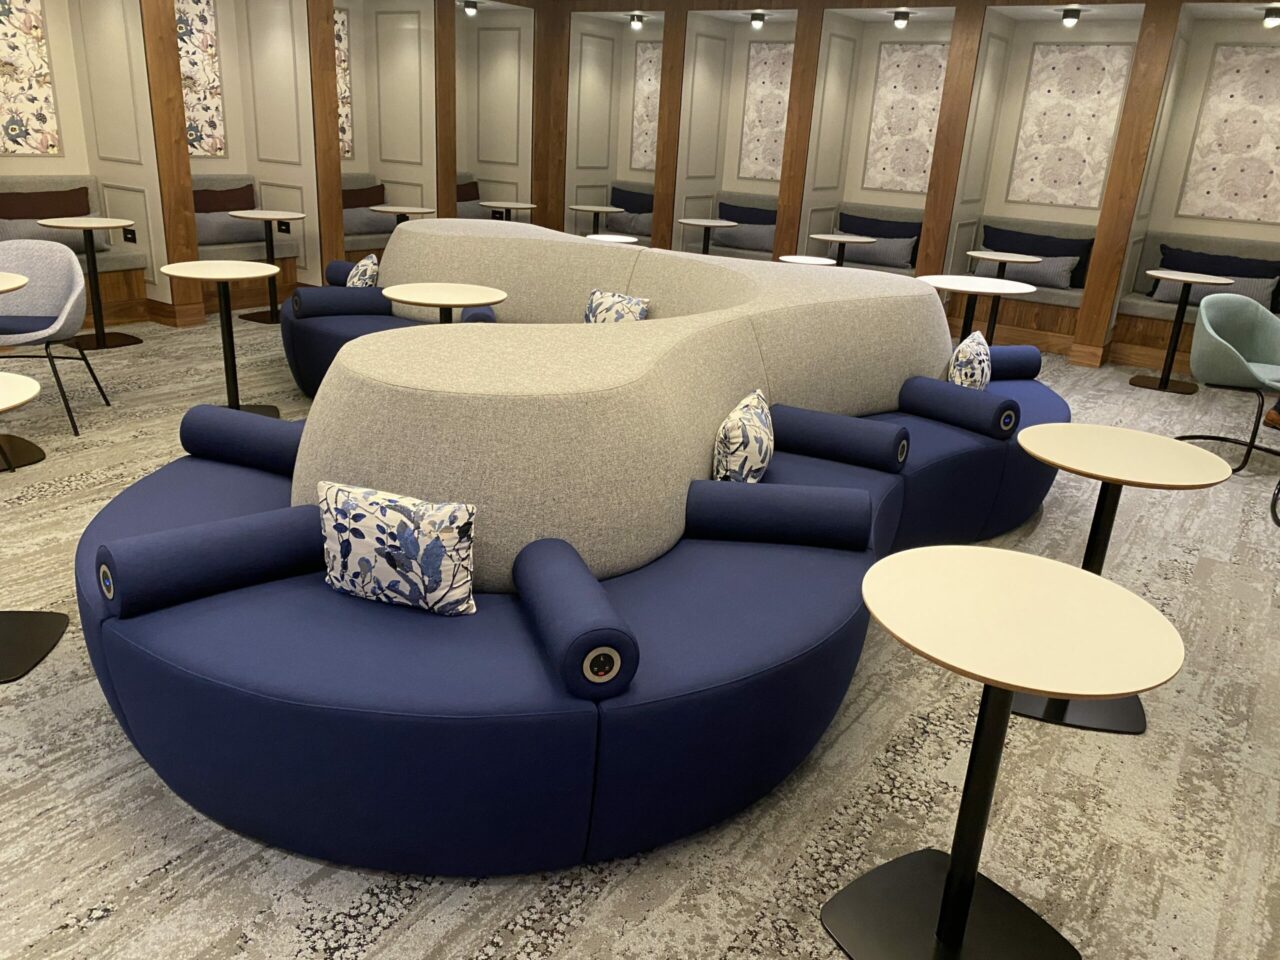 American Express New Centurion Lounge area 